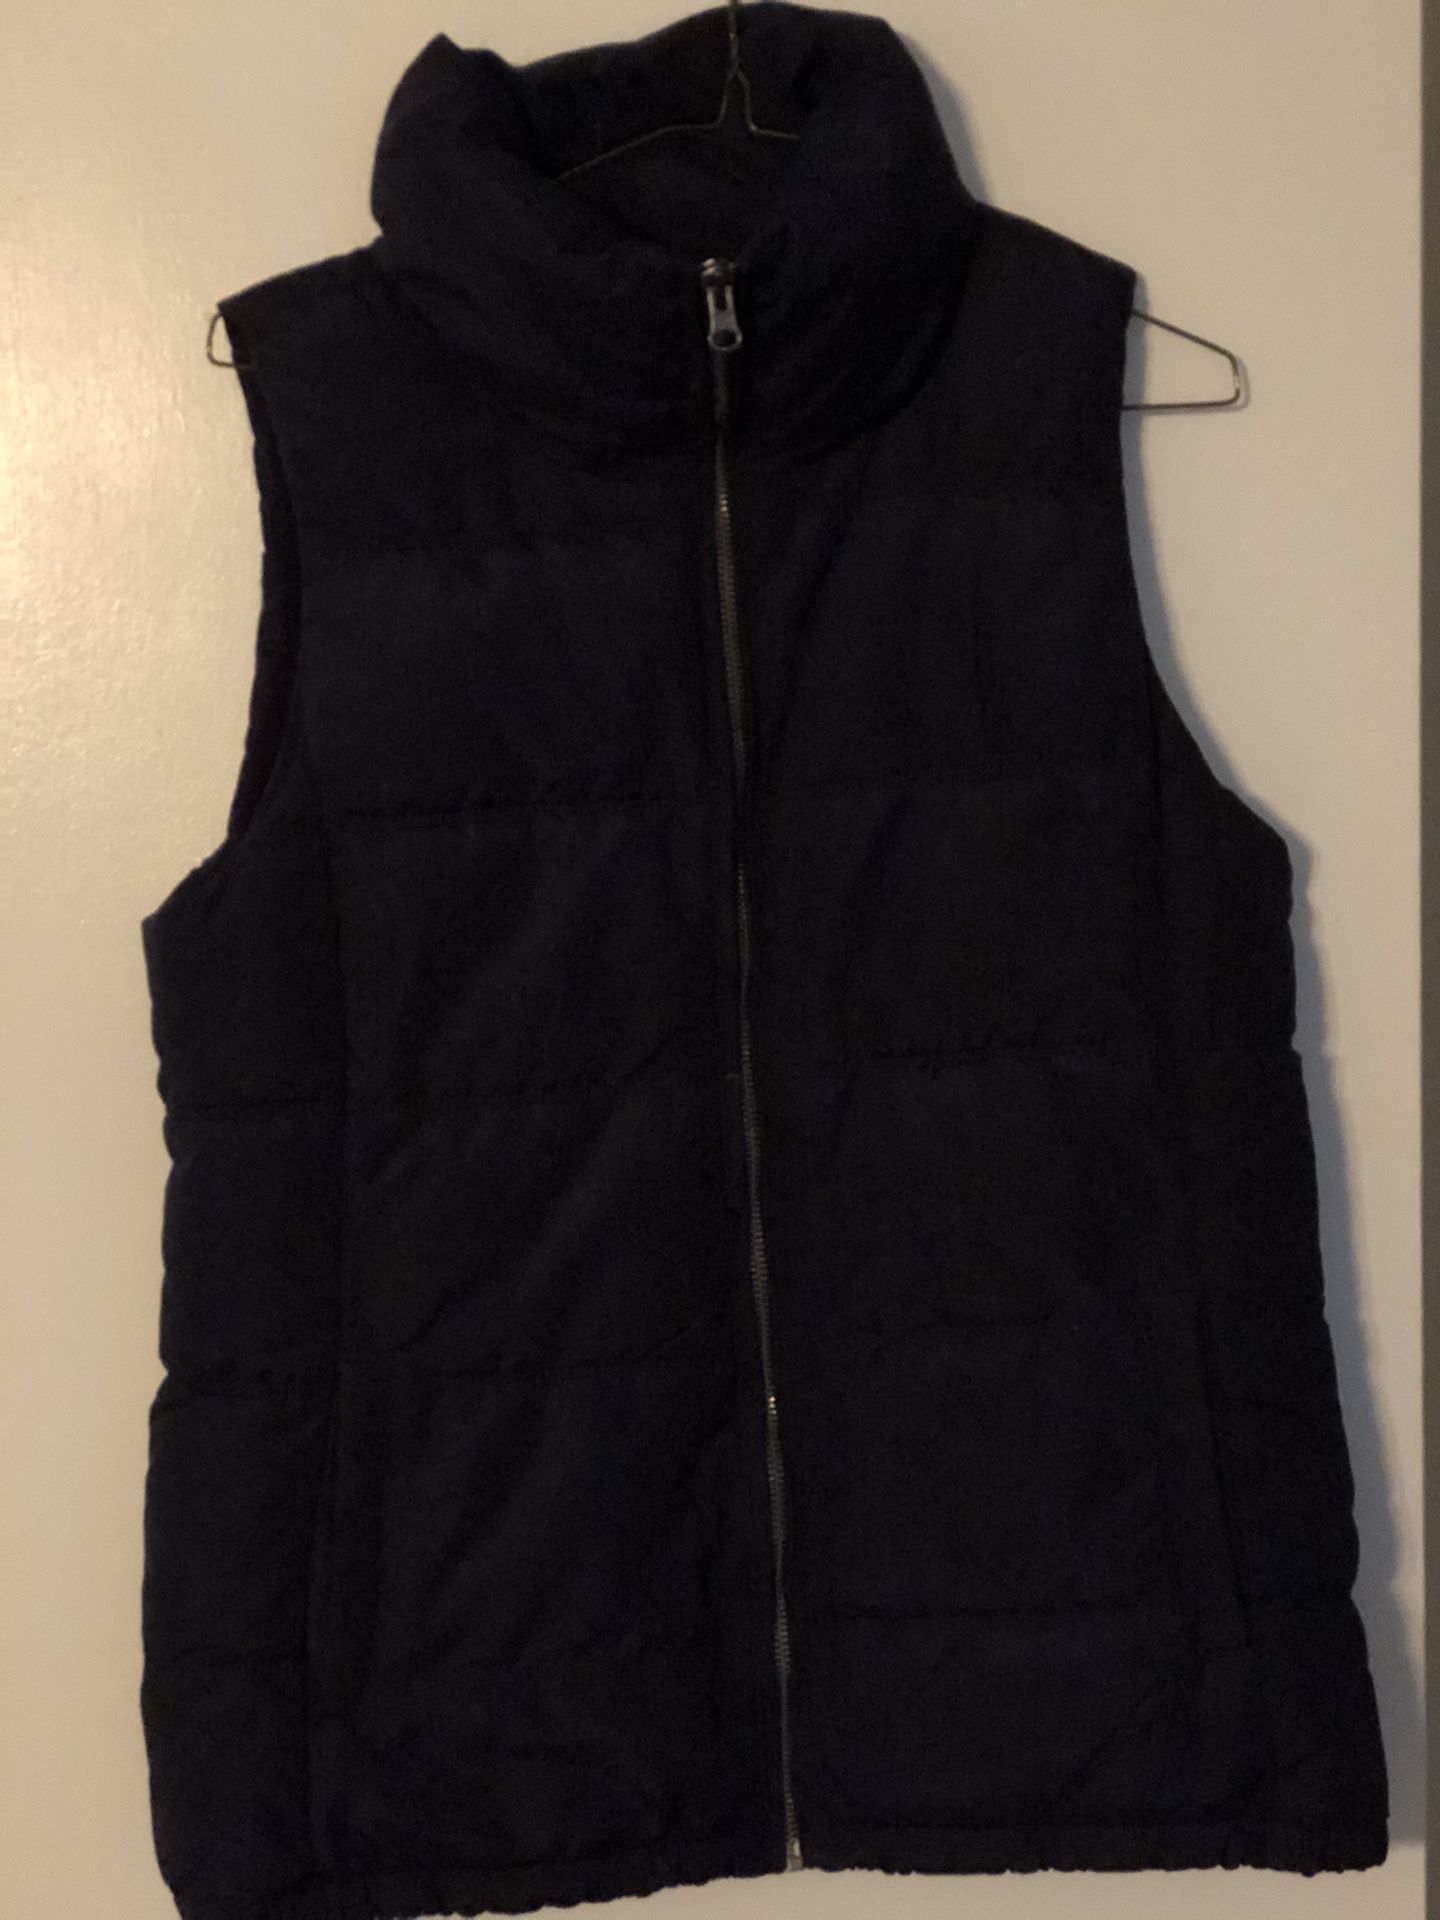 Old navy vest